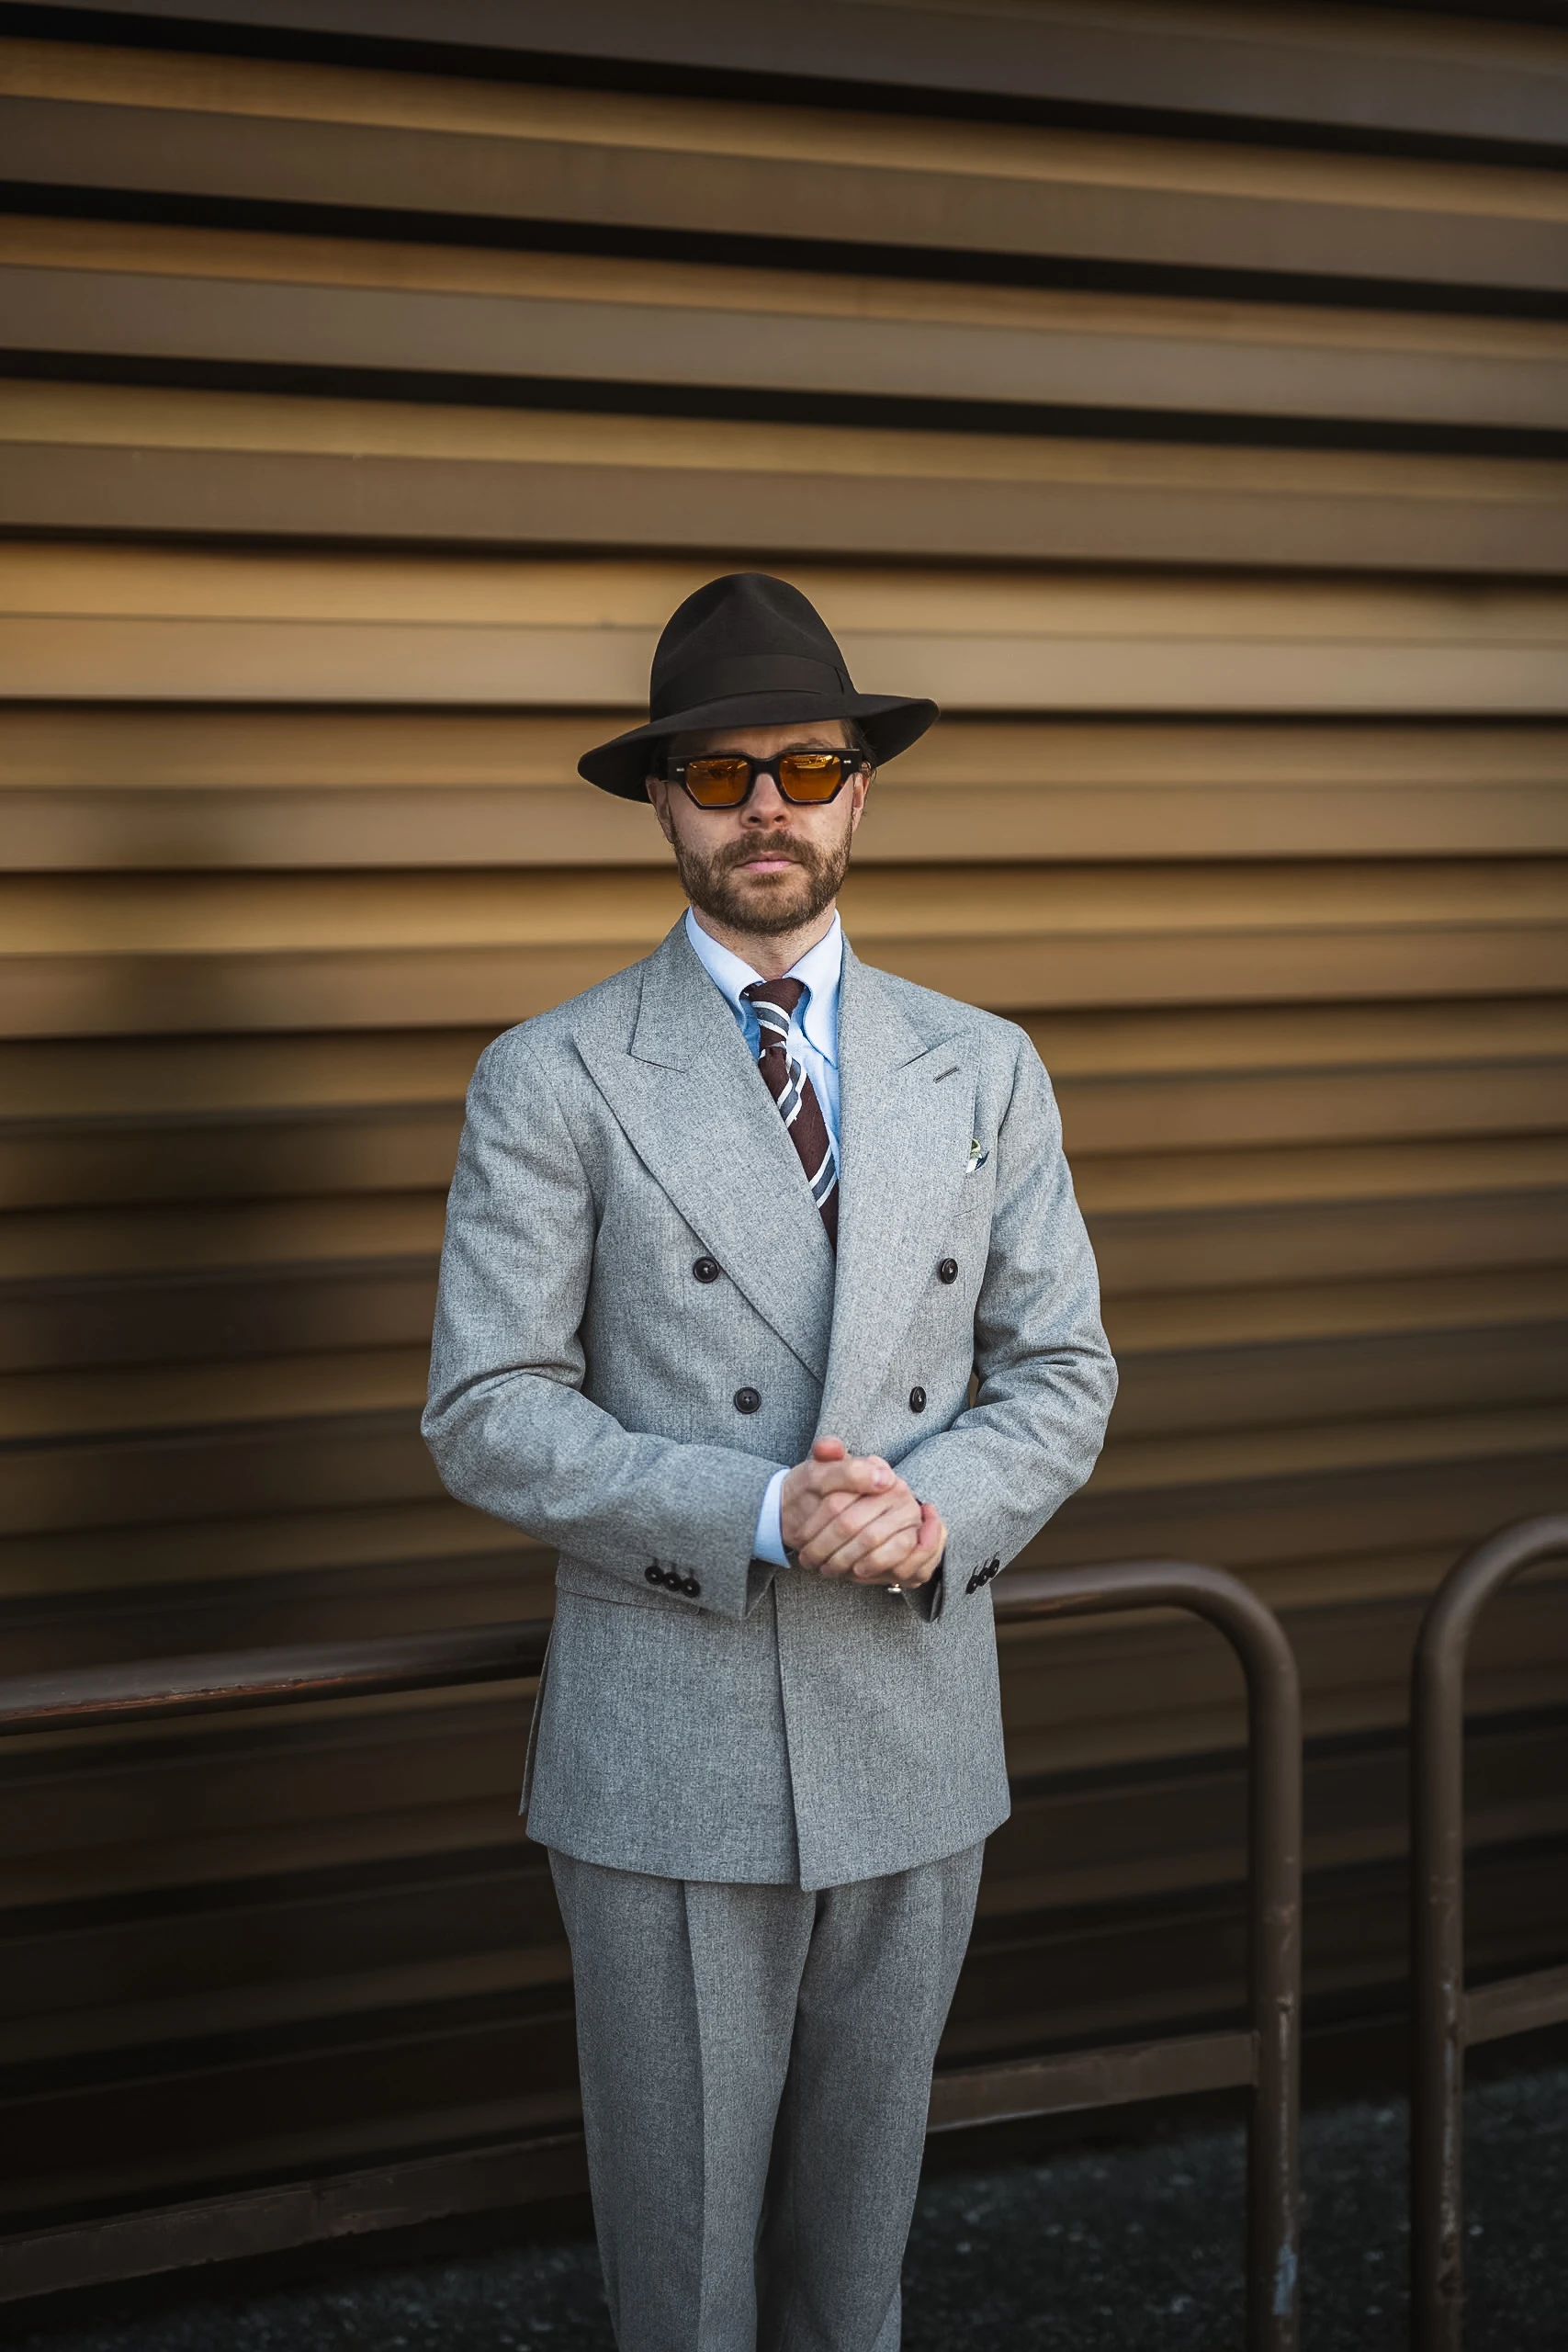 sartorial finn johan wikkstrom wearing a custom made grey flannel suit by mond of copenhagen at pitti uomo 105